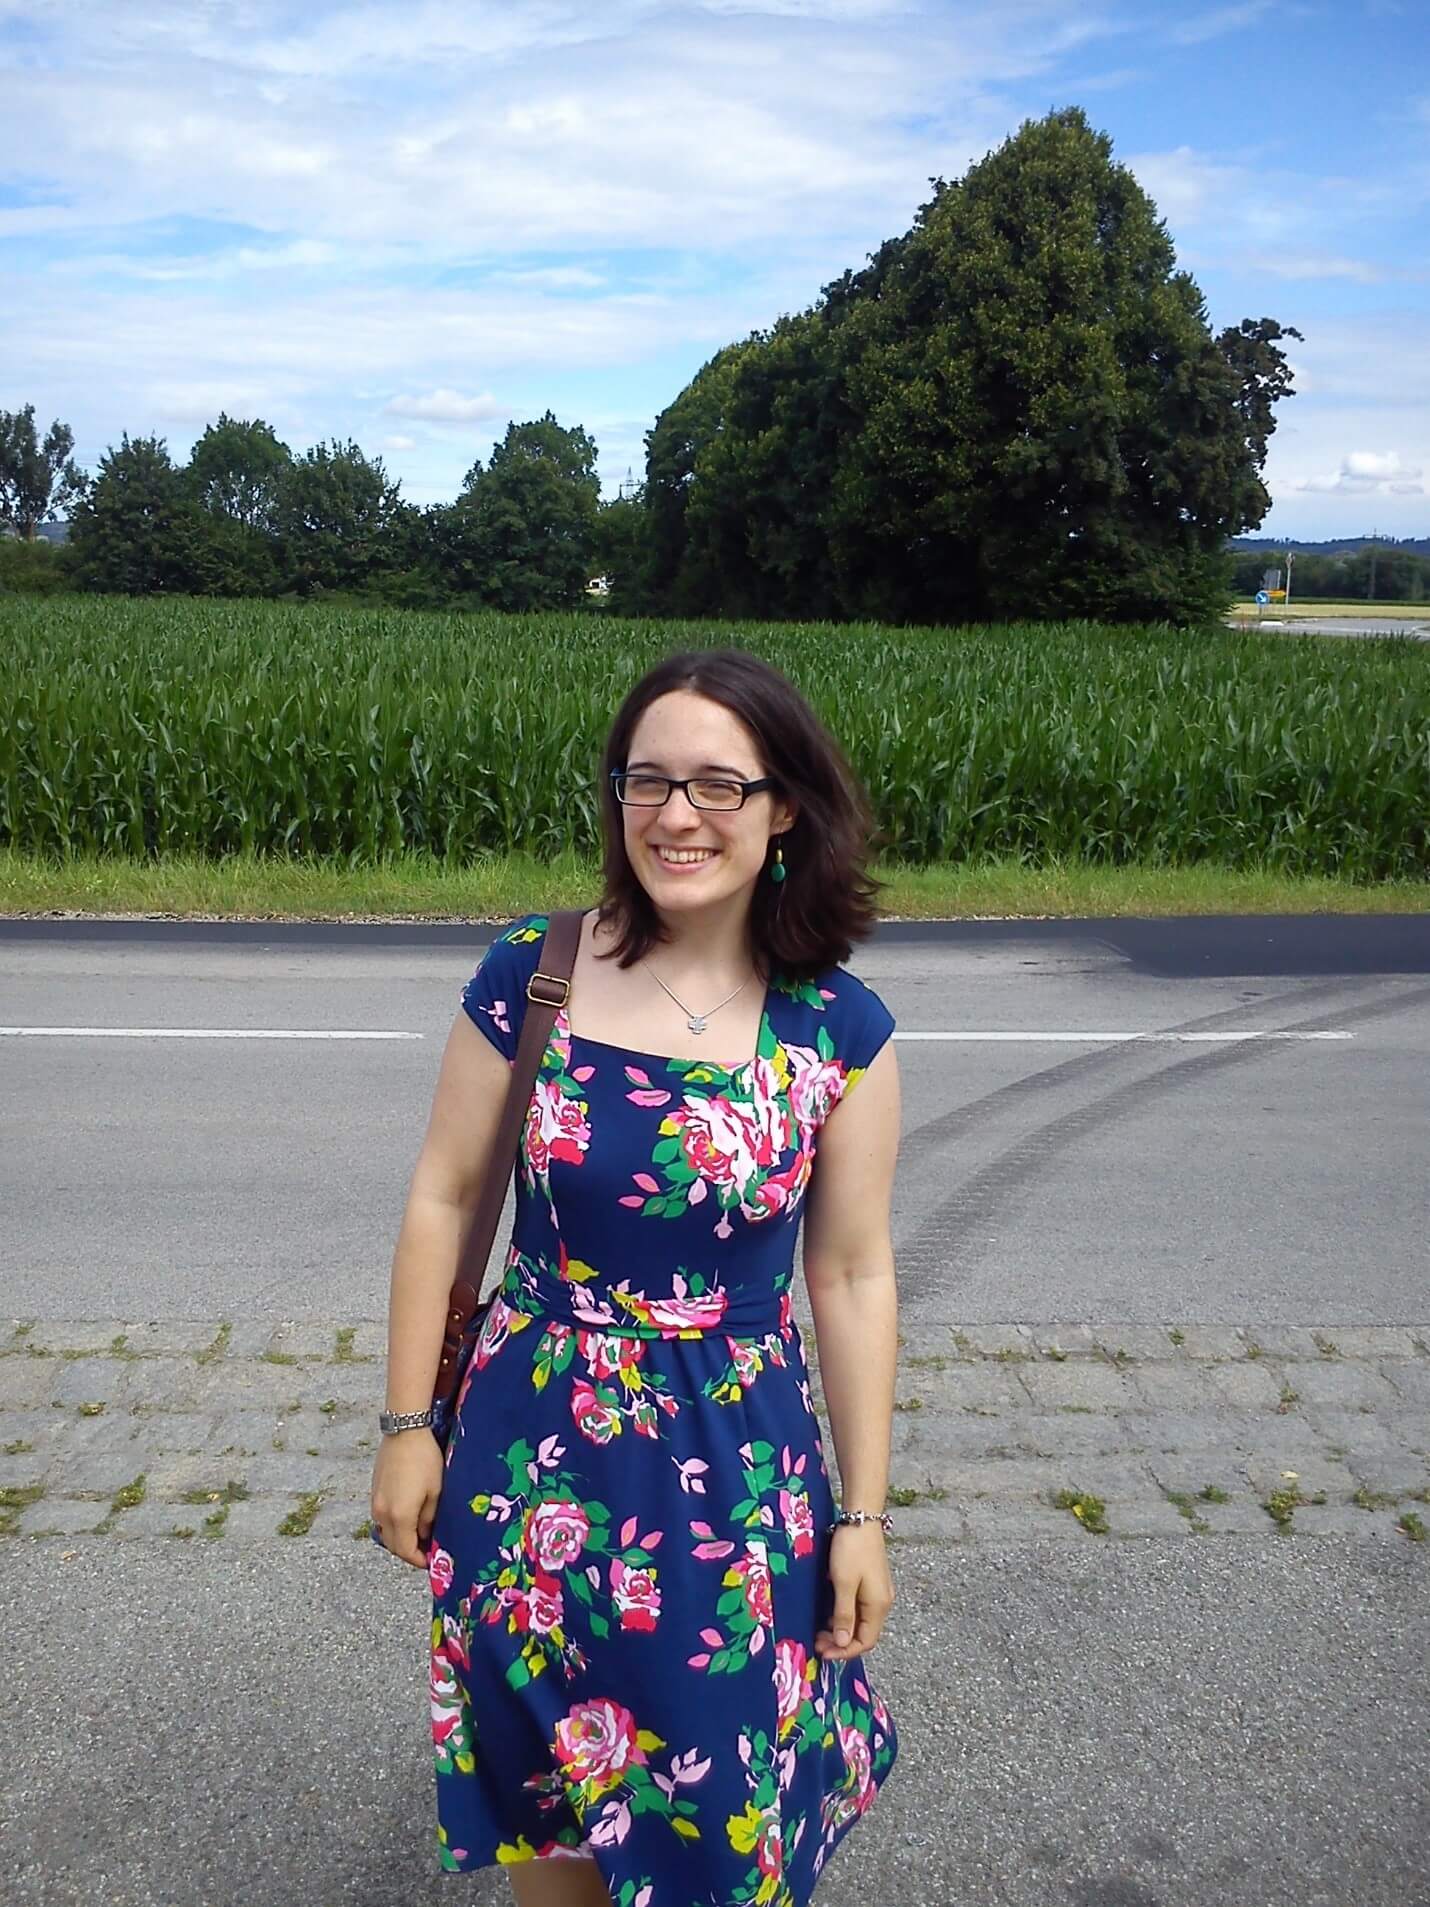 Lara von Detten smiling at the side of a road.